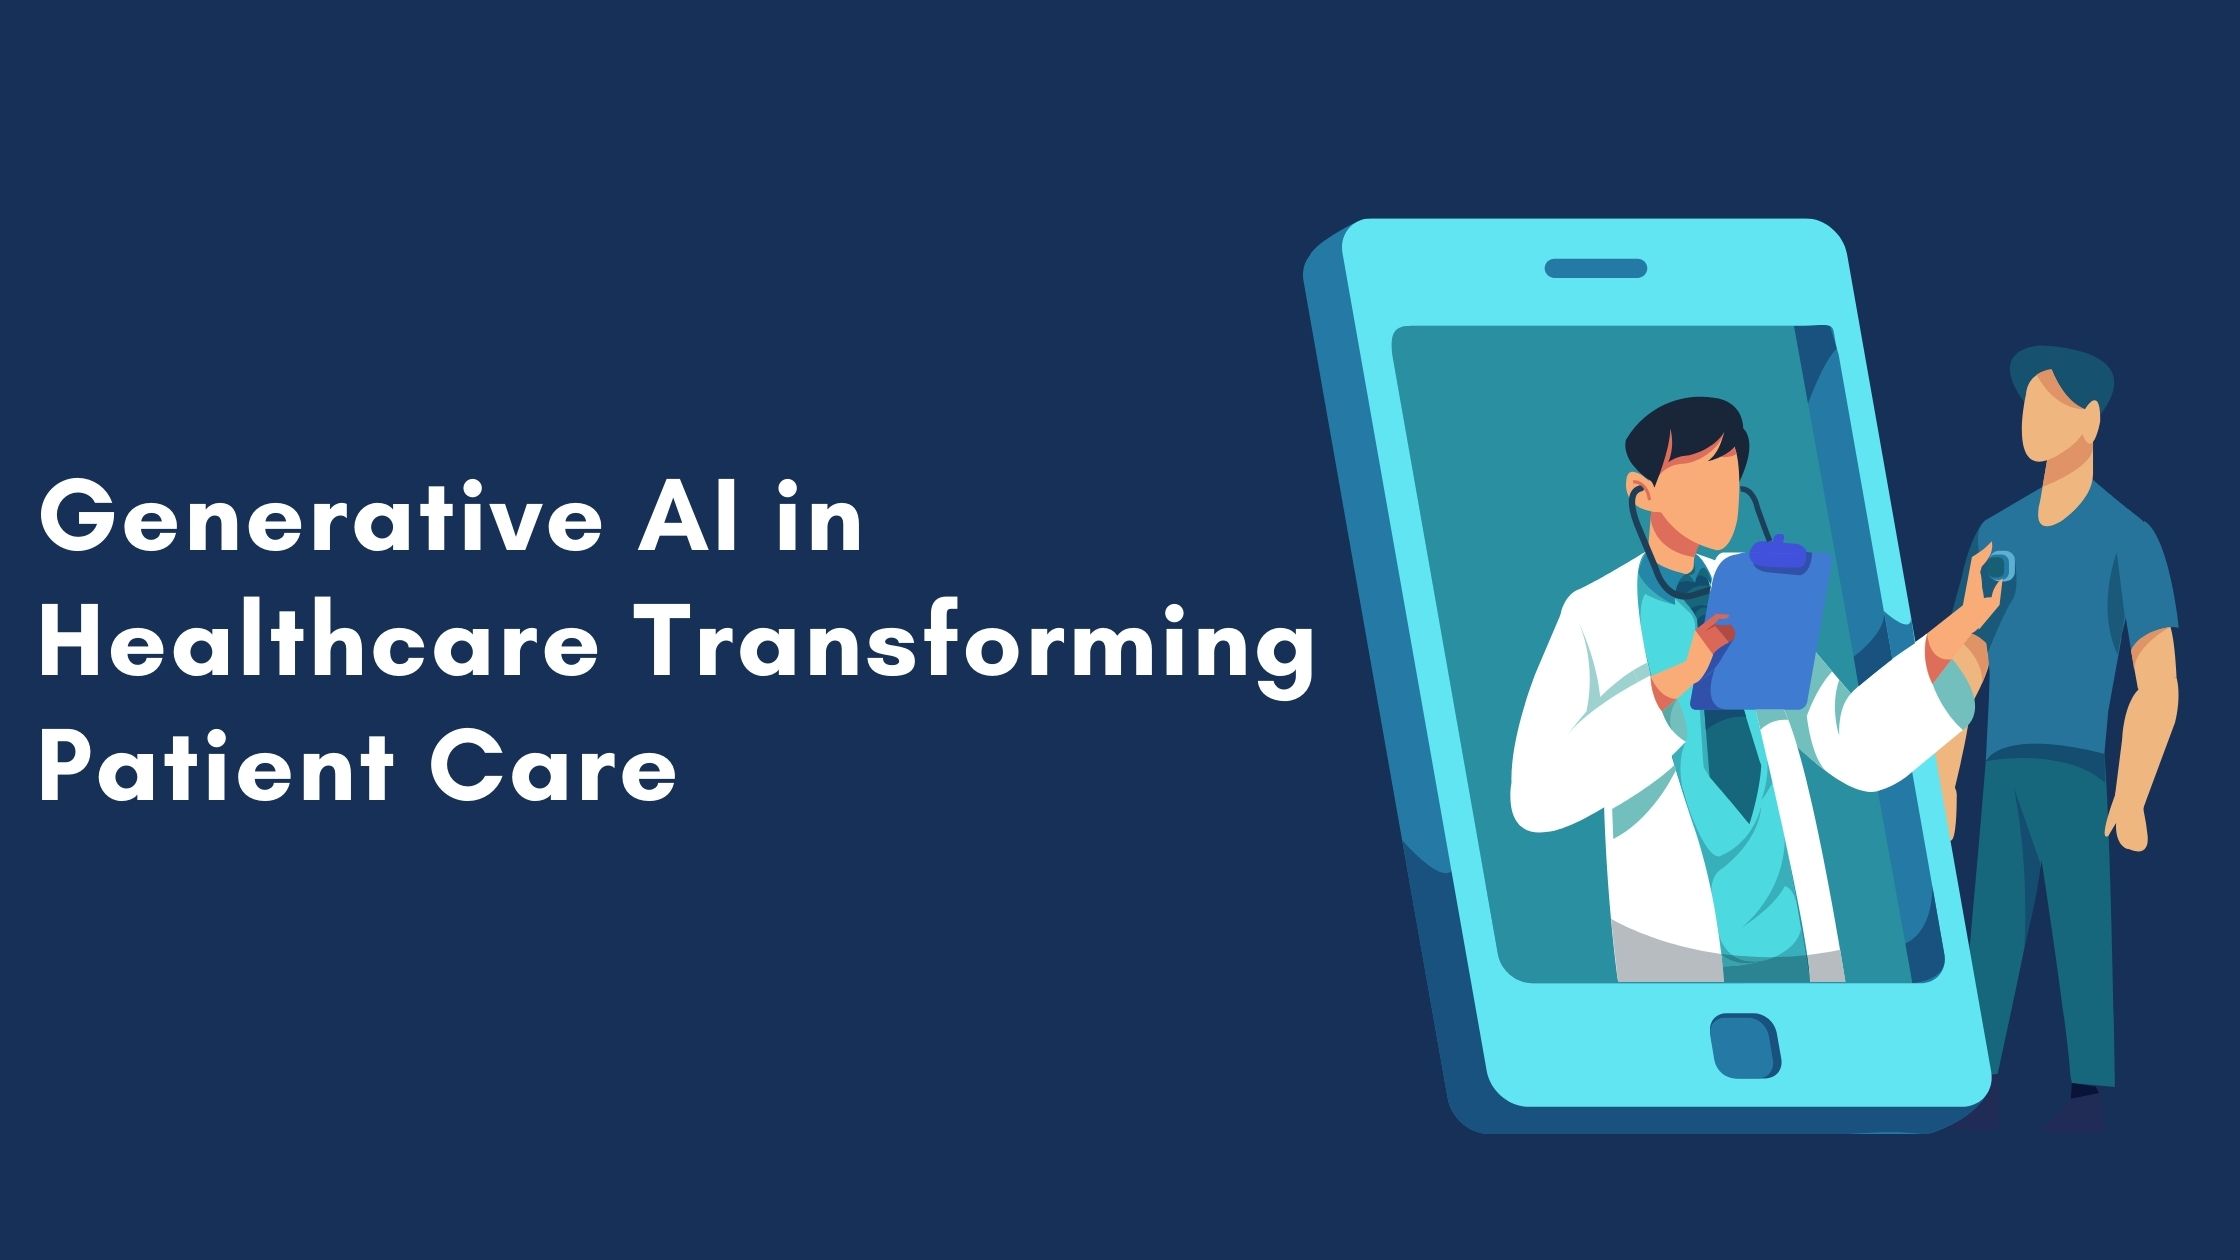 Generative AI in Healthcare: Transforming Patient Care